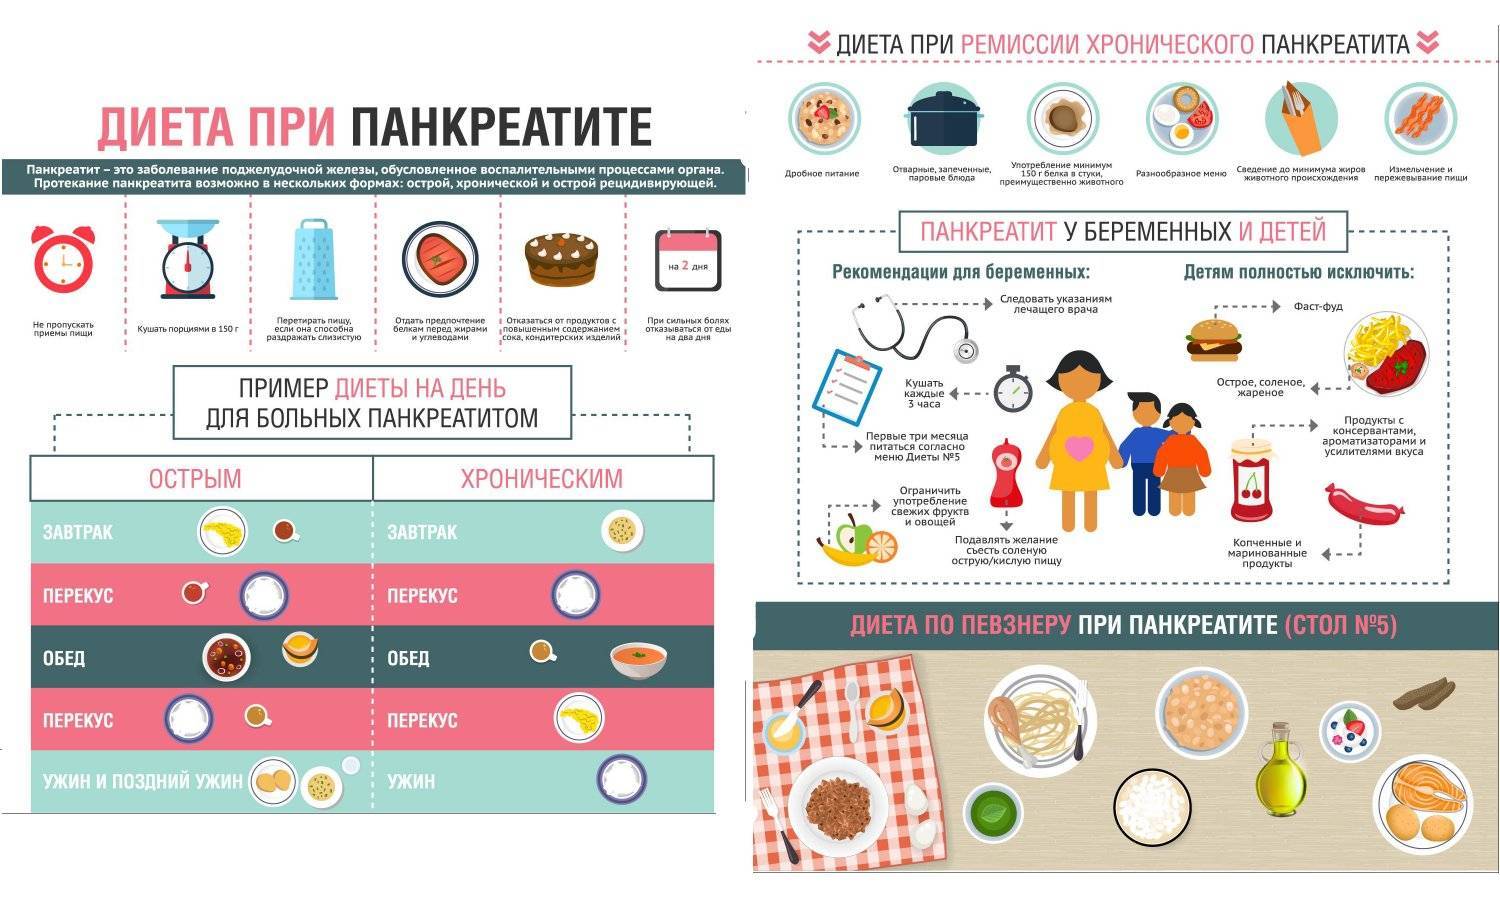 Мед при панкреатите: можно или нет, рецепты и правила приема